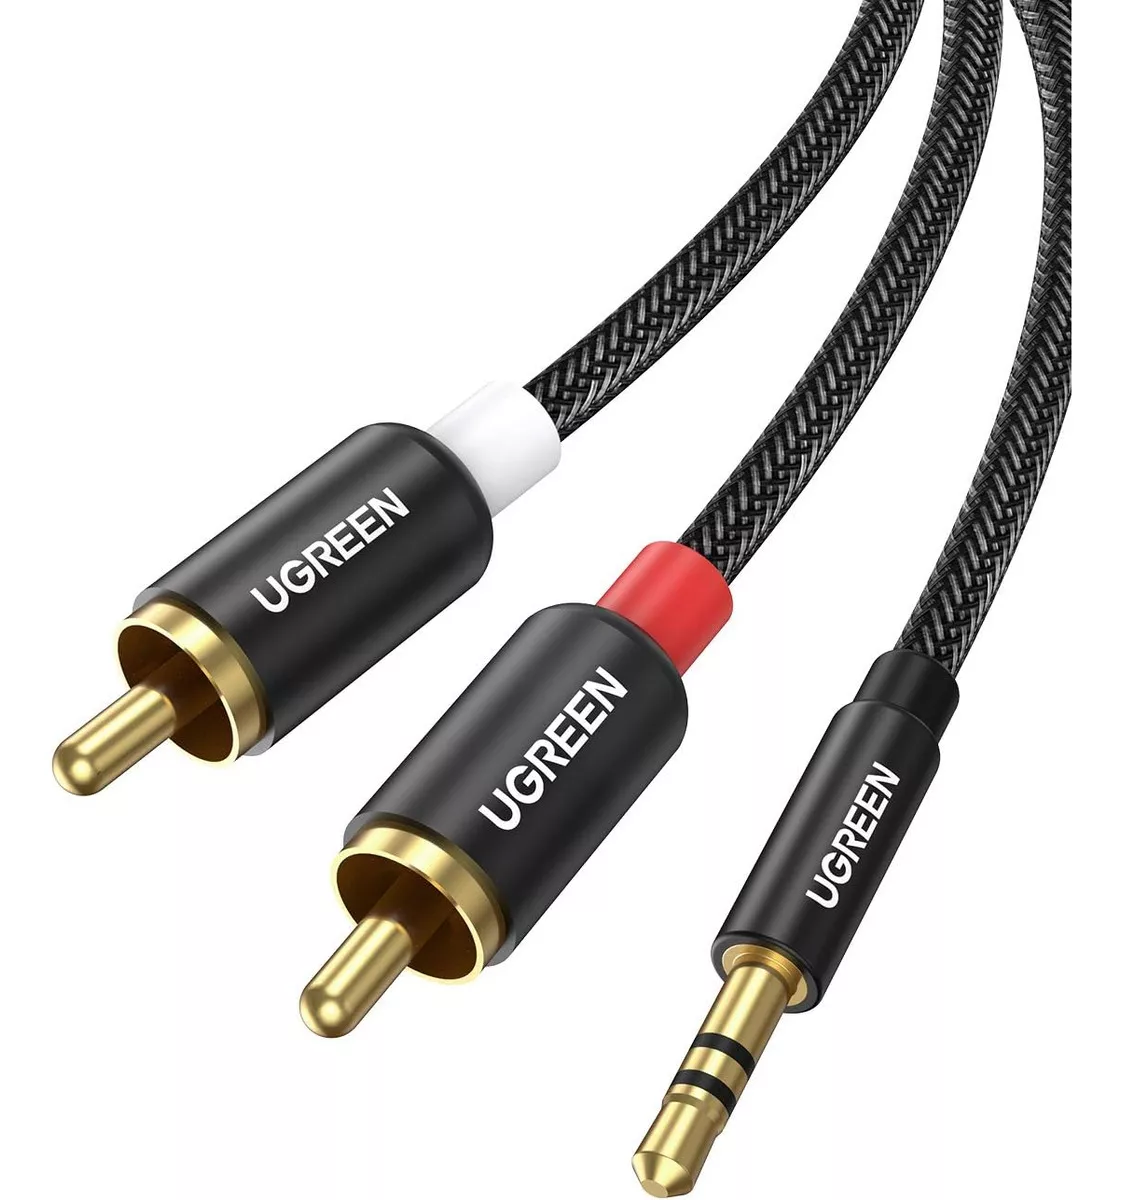 Tercera imagen para búsqueda de cable auxiliar de audio